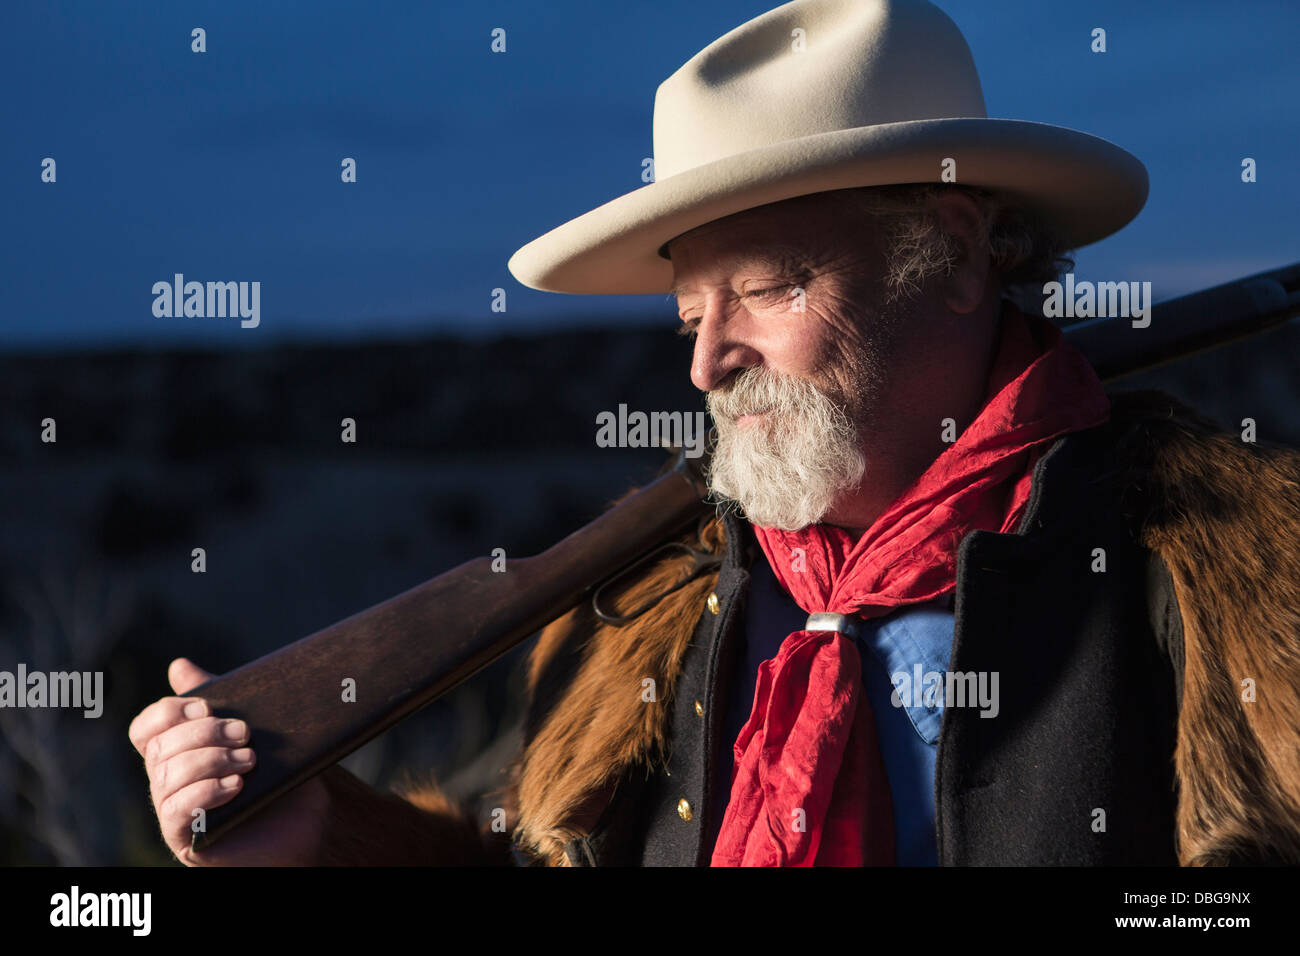 Caucasian man holding gun outdoors Stock Photo